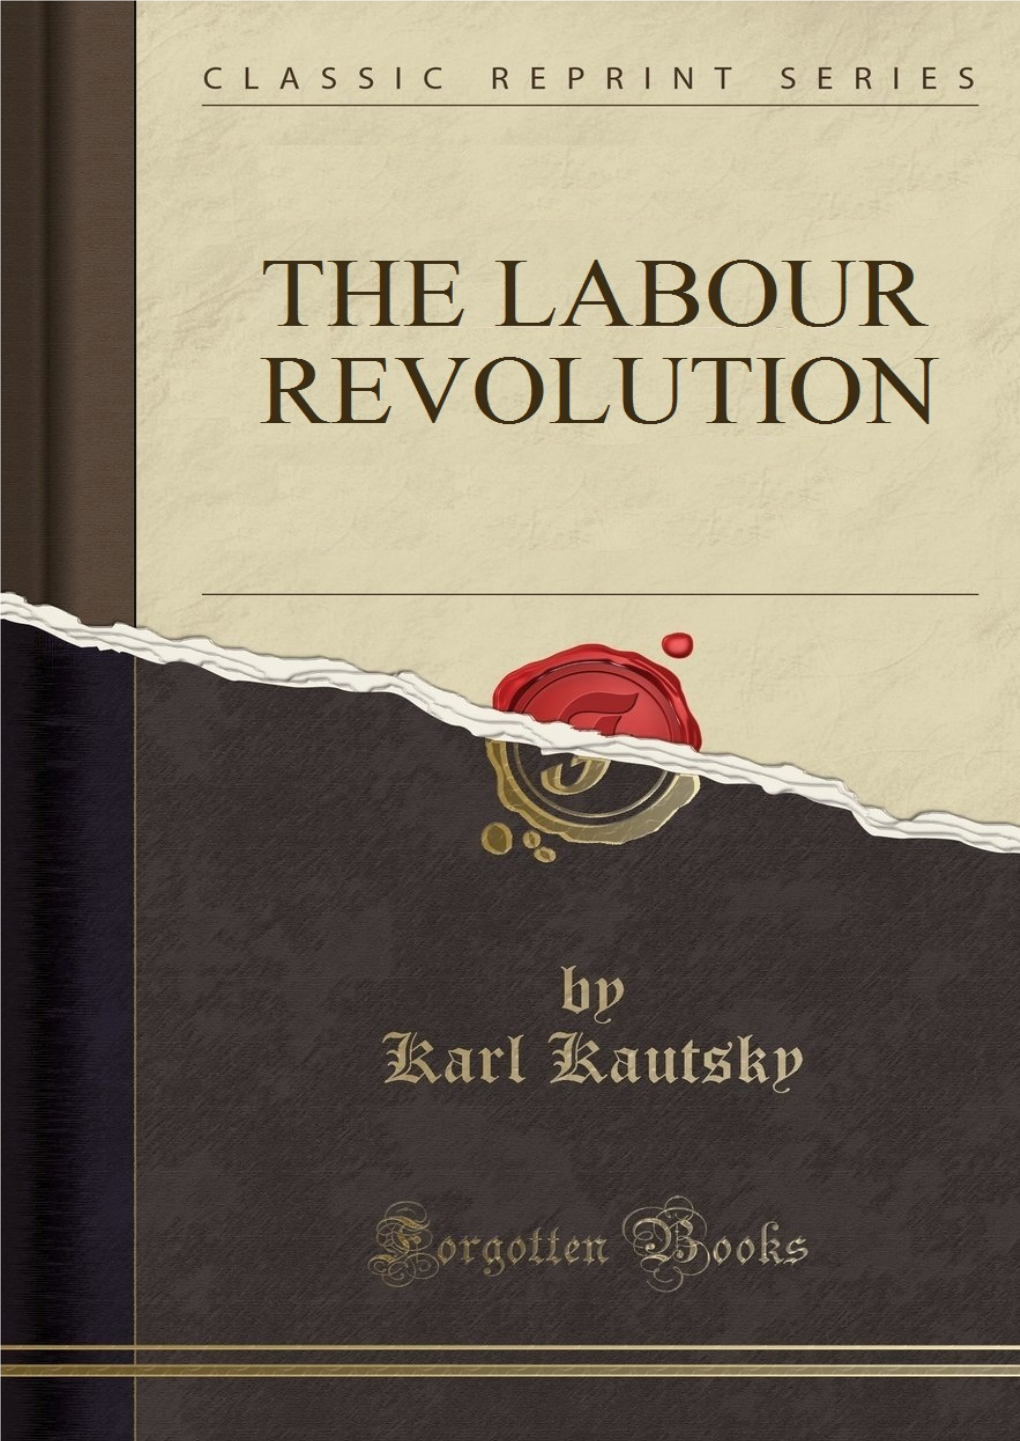 Karl Kautsky the Labour Revolution (1924)